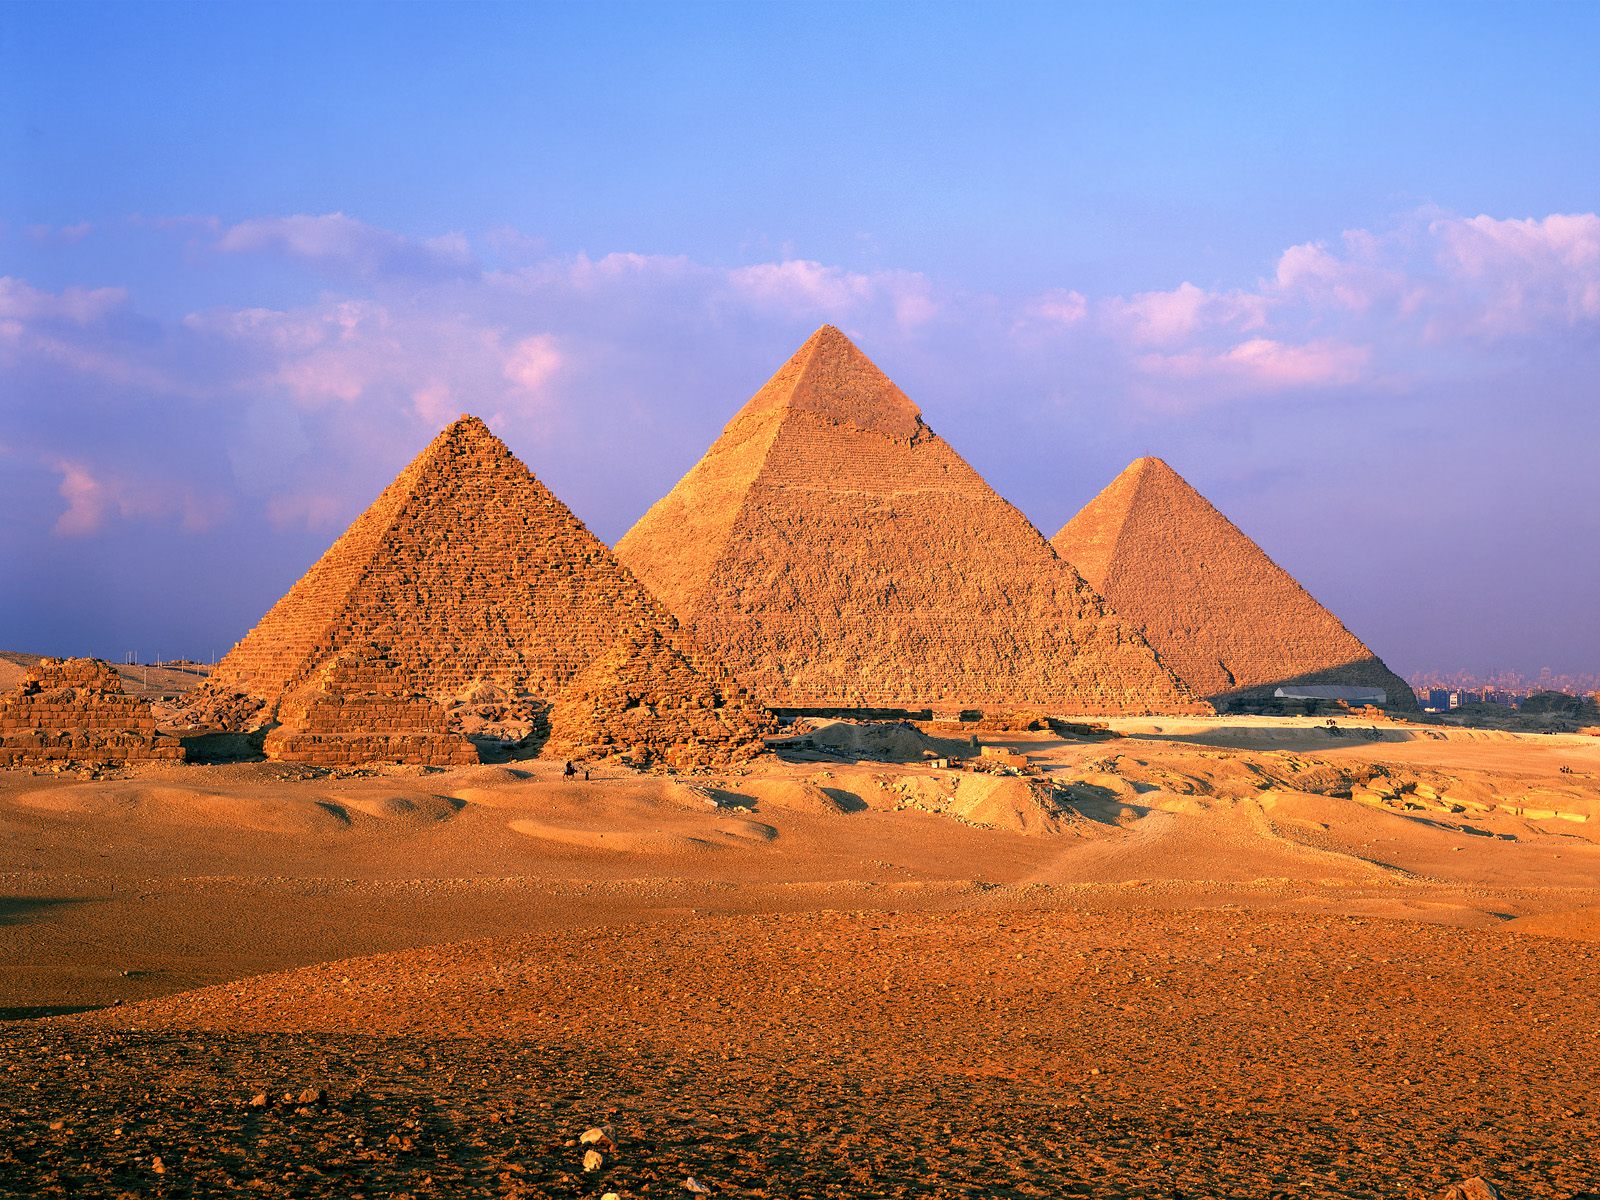 http://ancientworldwonders.com/uploads/Pyramids_of_Giza.jpg